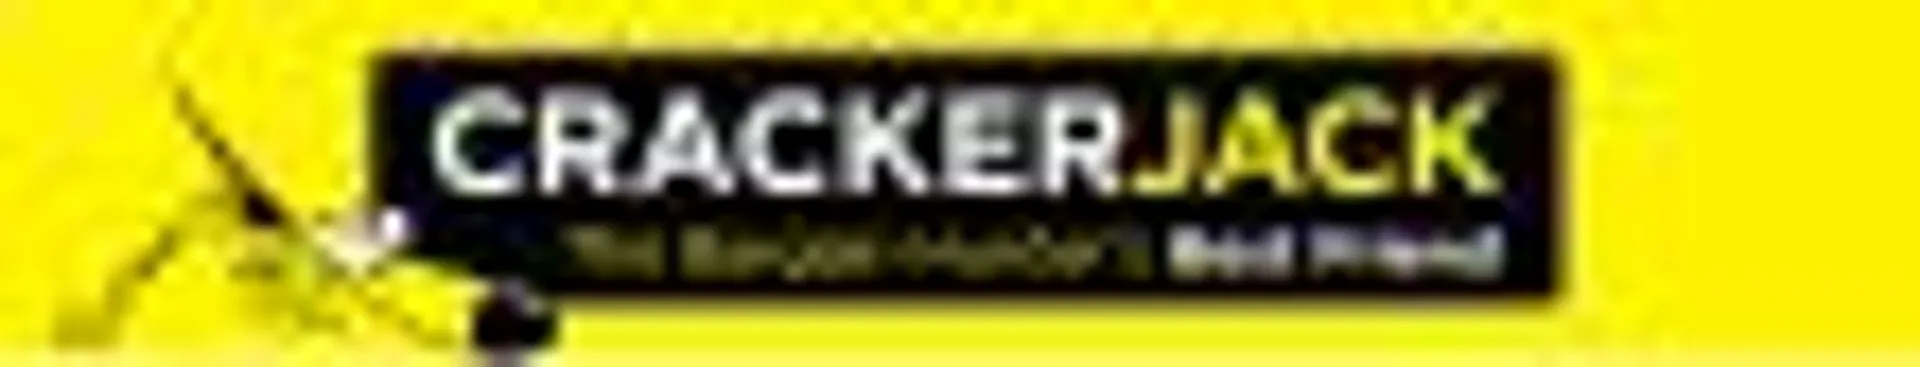 CRACKERJACK logo. Current weekly ad